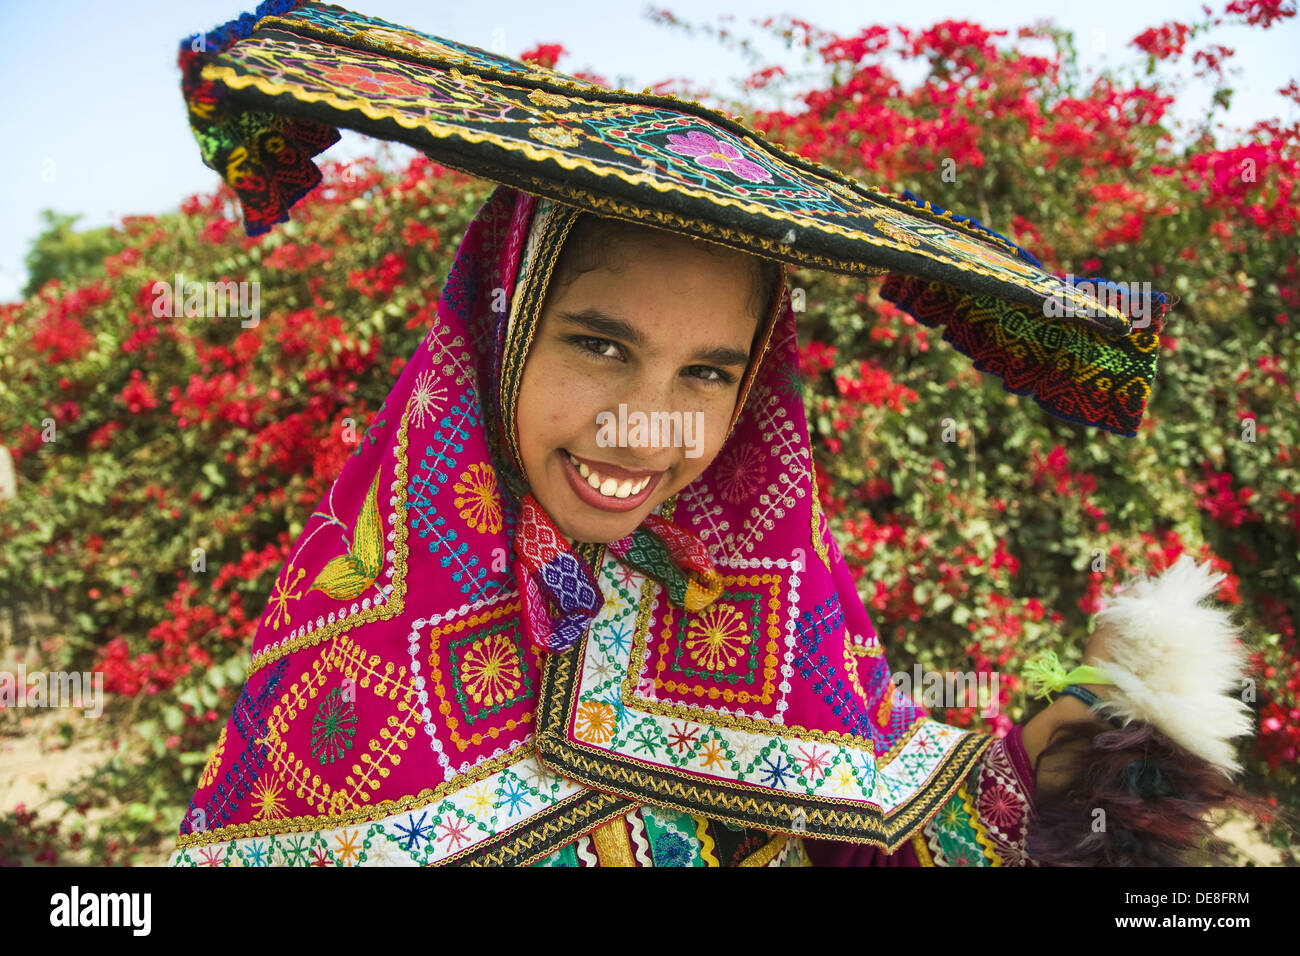 Peru cusco portrait young girl fotografías e imágenes de alta resolución -  Alamy